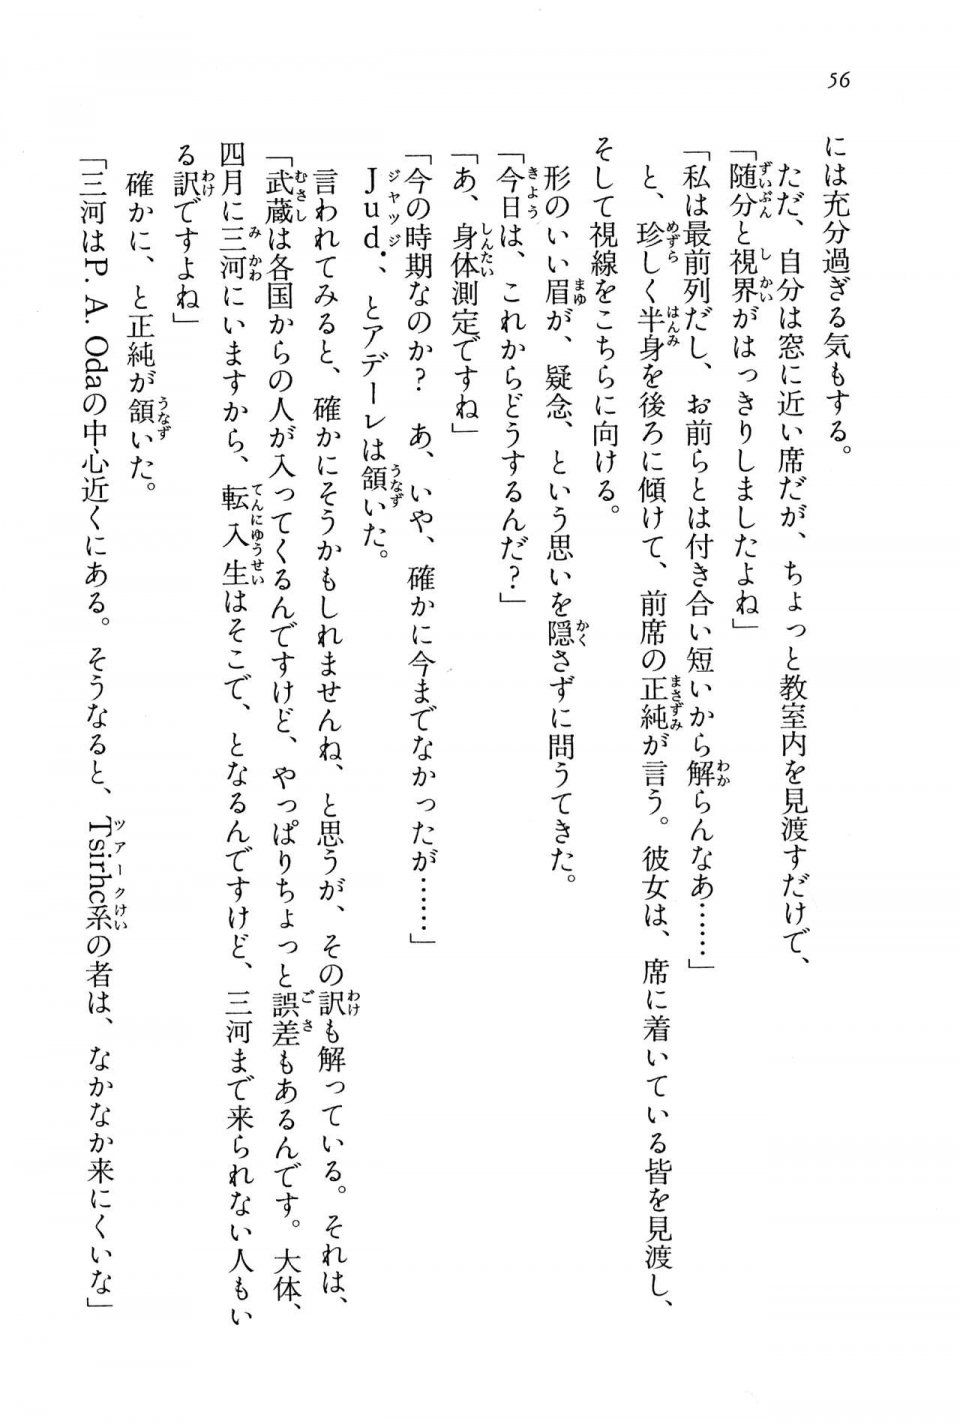 Kyoukai Senjou no Horizon BD Special Mininovel Vol 5(3A) - Photo #60